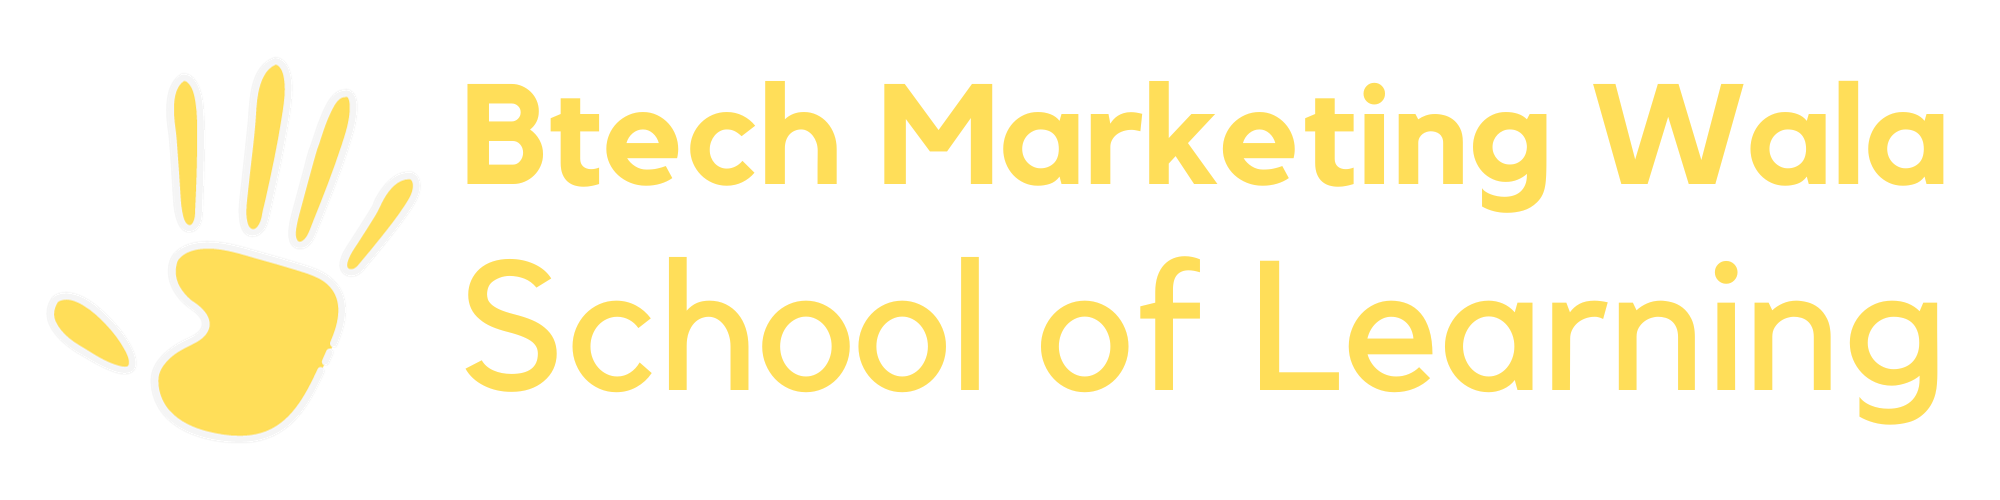 Btech Marketing Wala School of Learning Light Logo